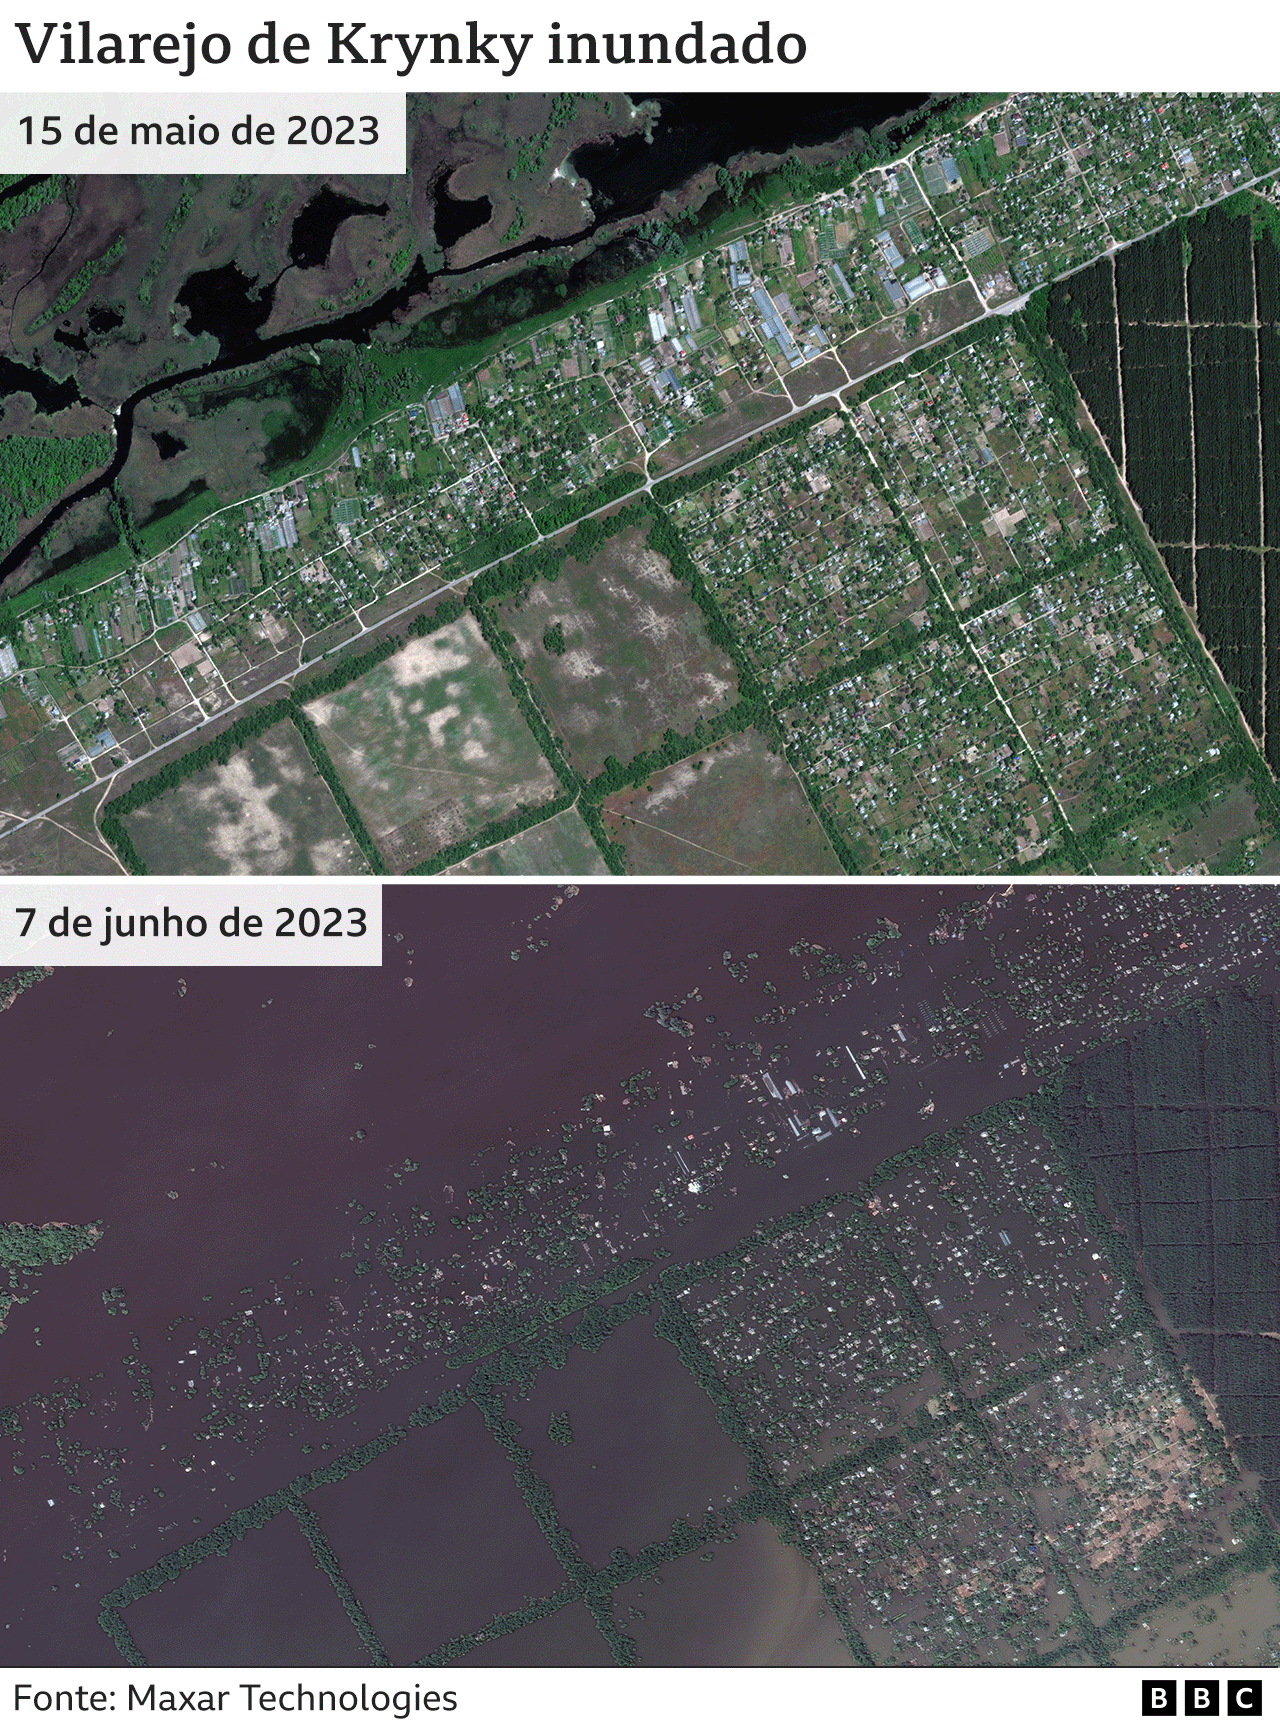 Imagens de satélite mostram o vilarejo de Kyrnky inundado